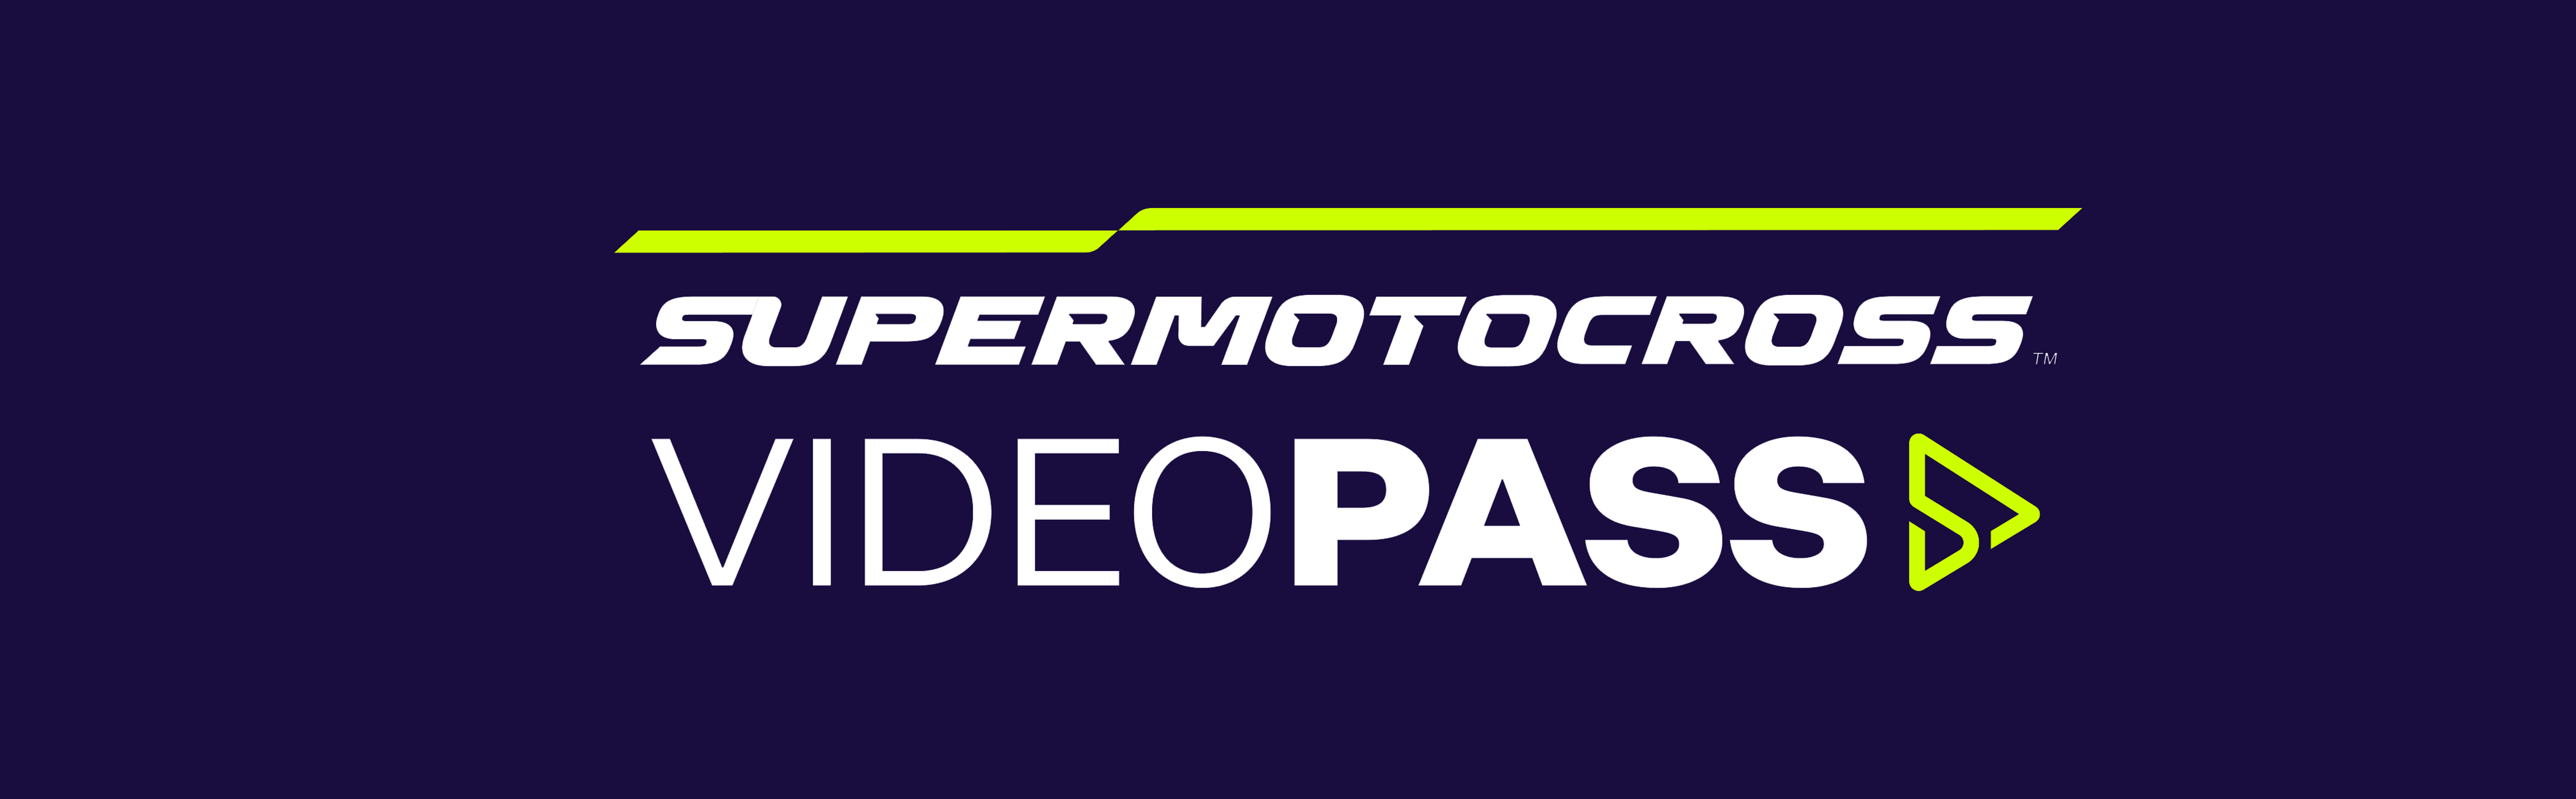 SuperMotocross Video Pass logo